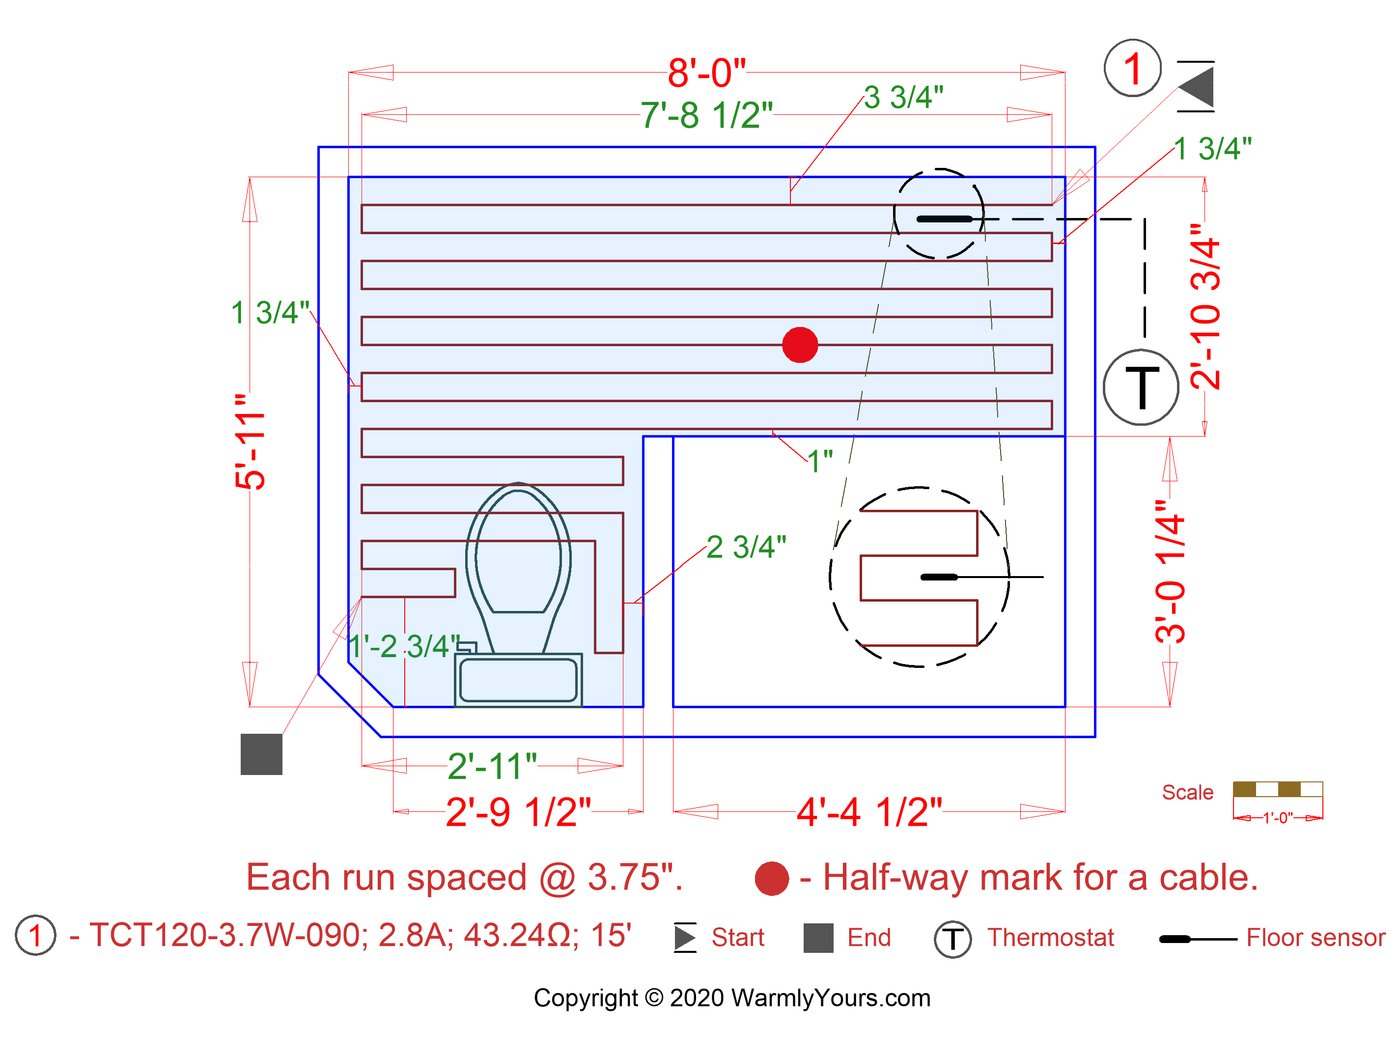 Electric Floor Heating Smartplan in Master Bathroom with TempZone Cable